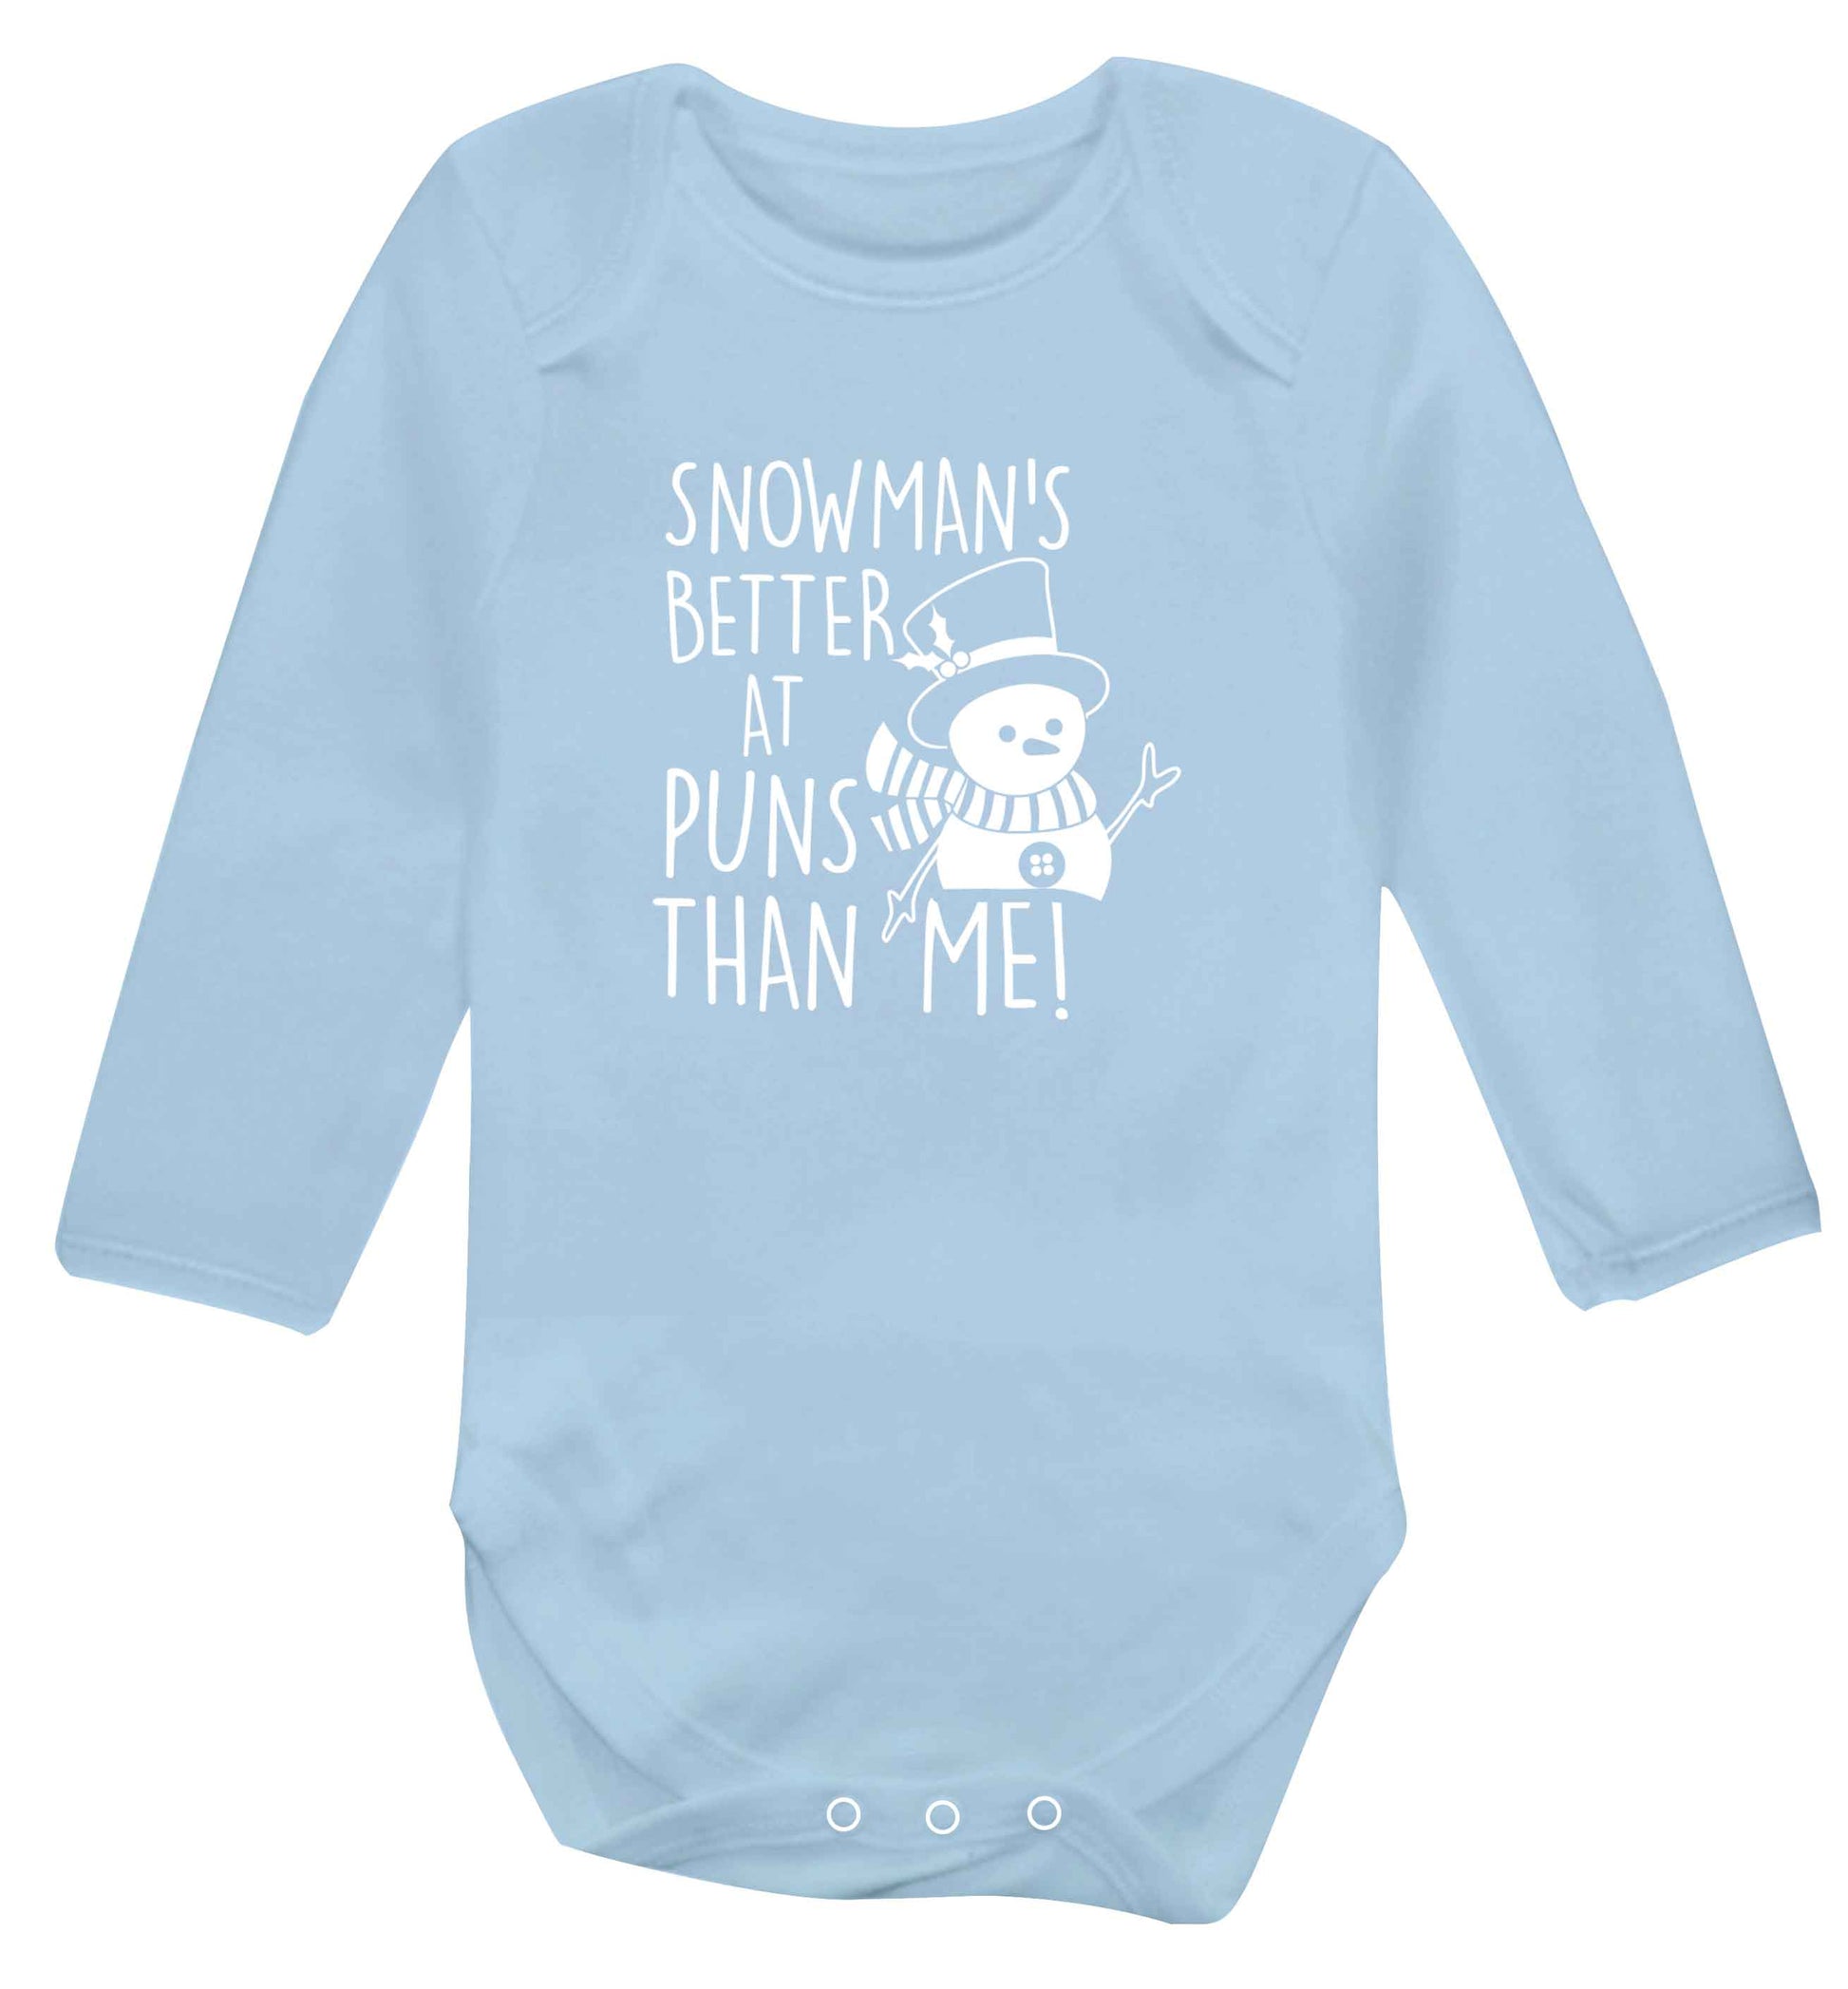 Snowman's Puns Me baby vest long sleeved pale blue 6-12 months